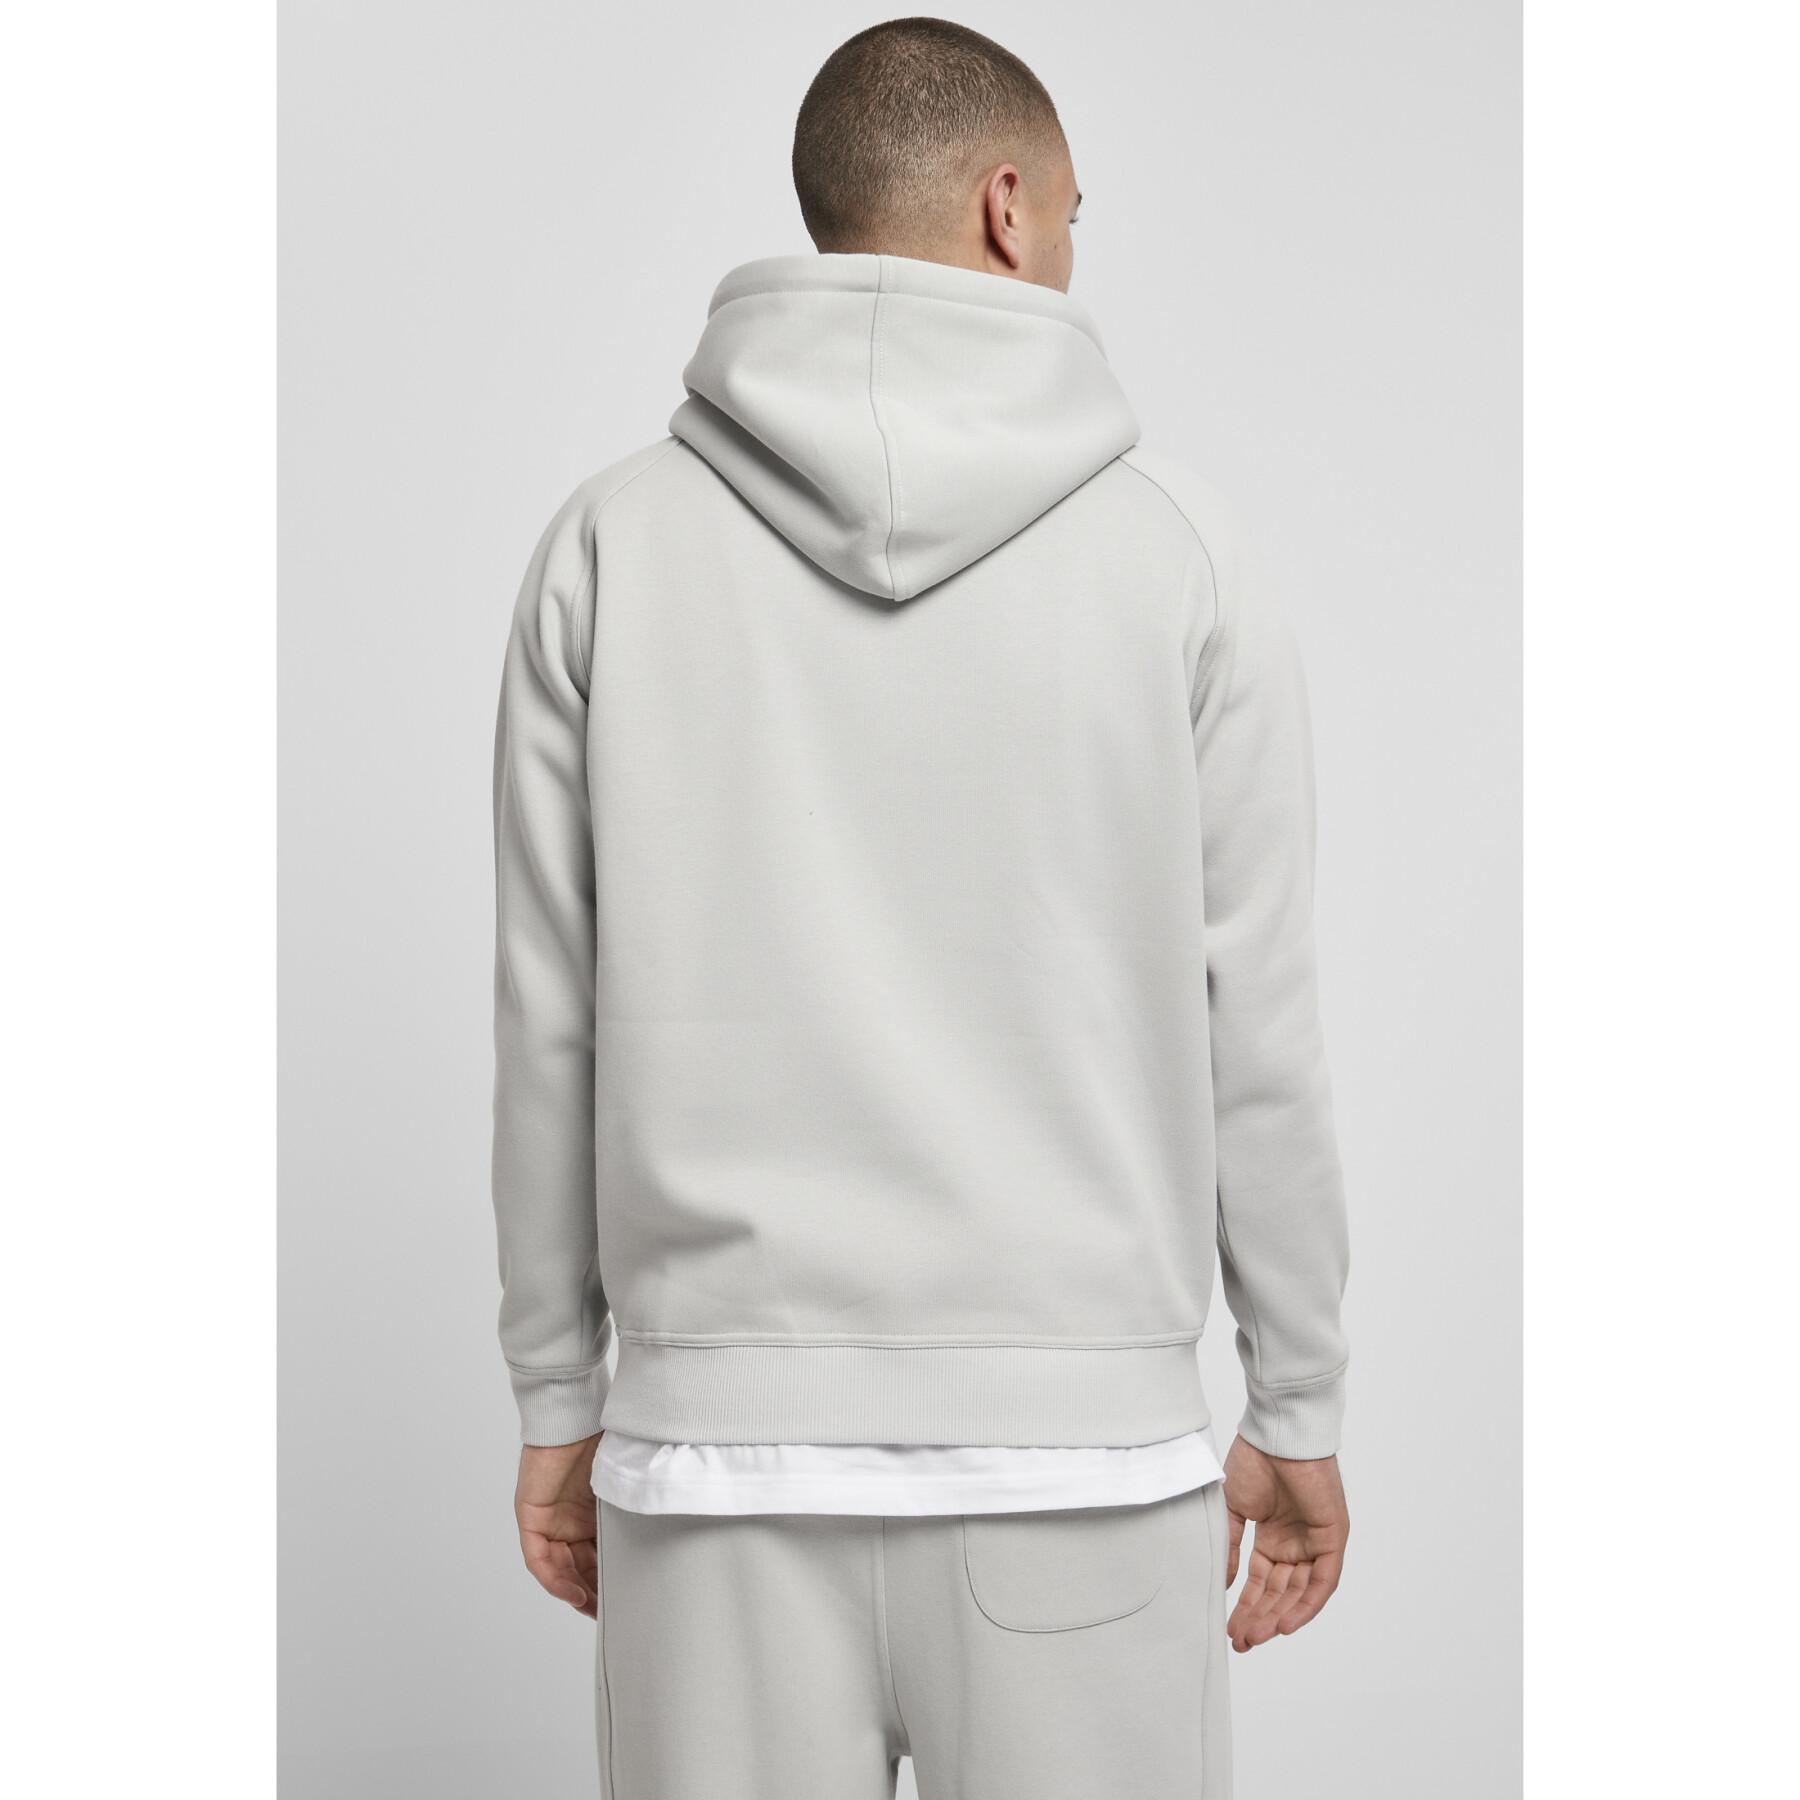 Hooded sweatshirt Urban Classics blank-grandes tailles